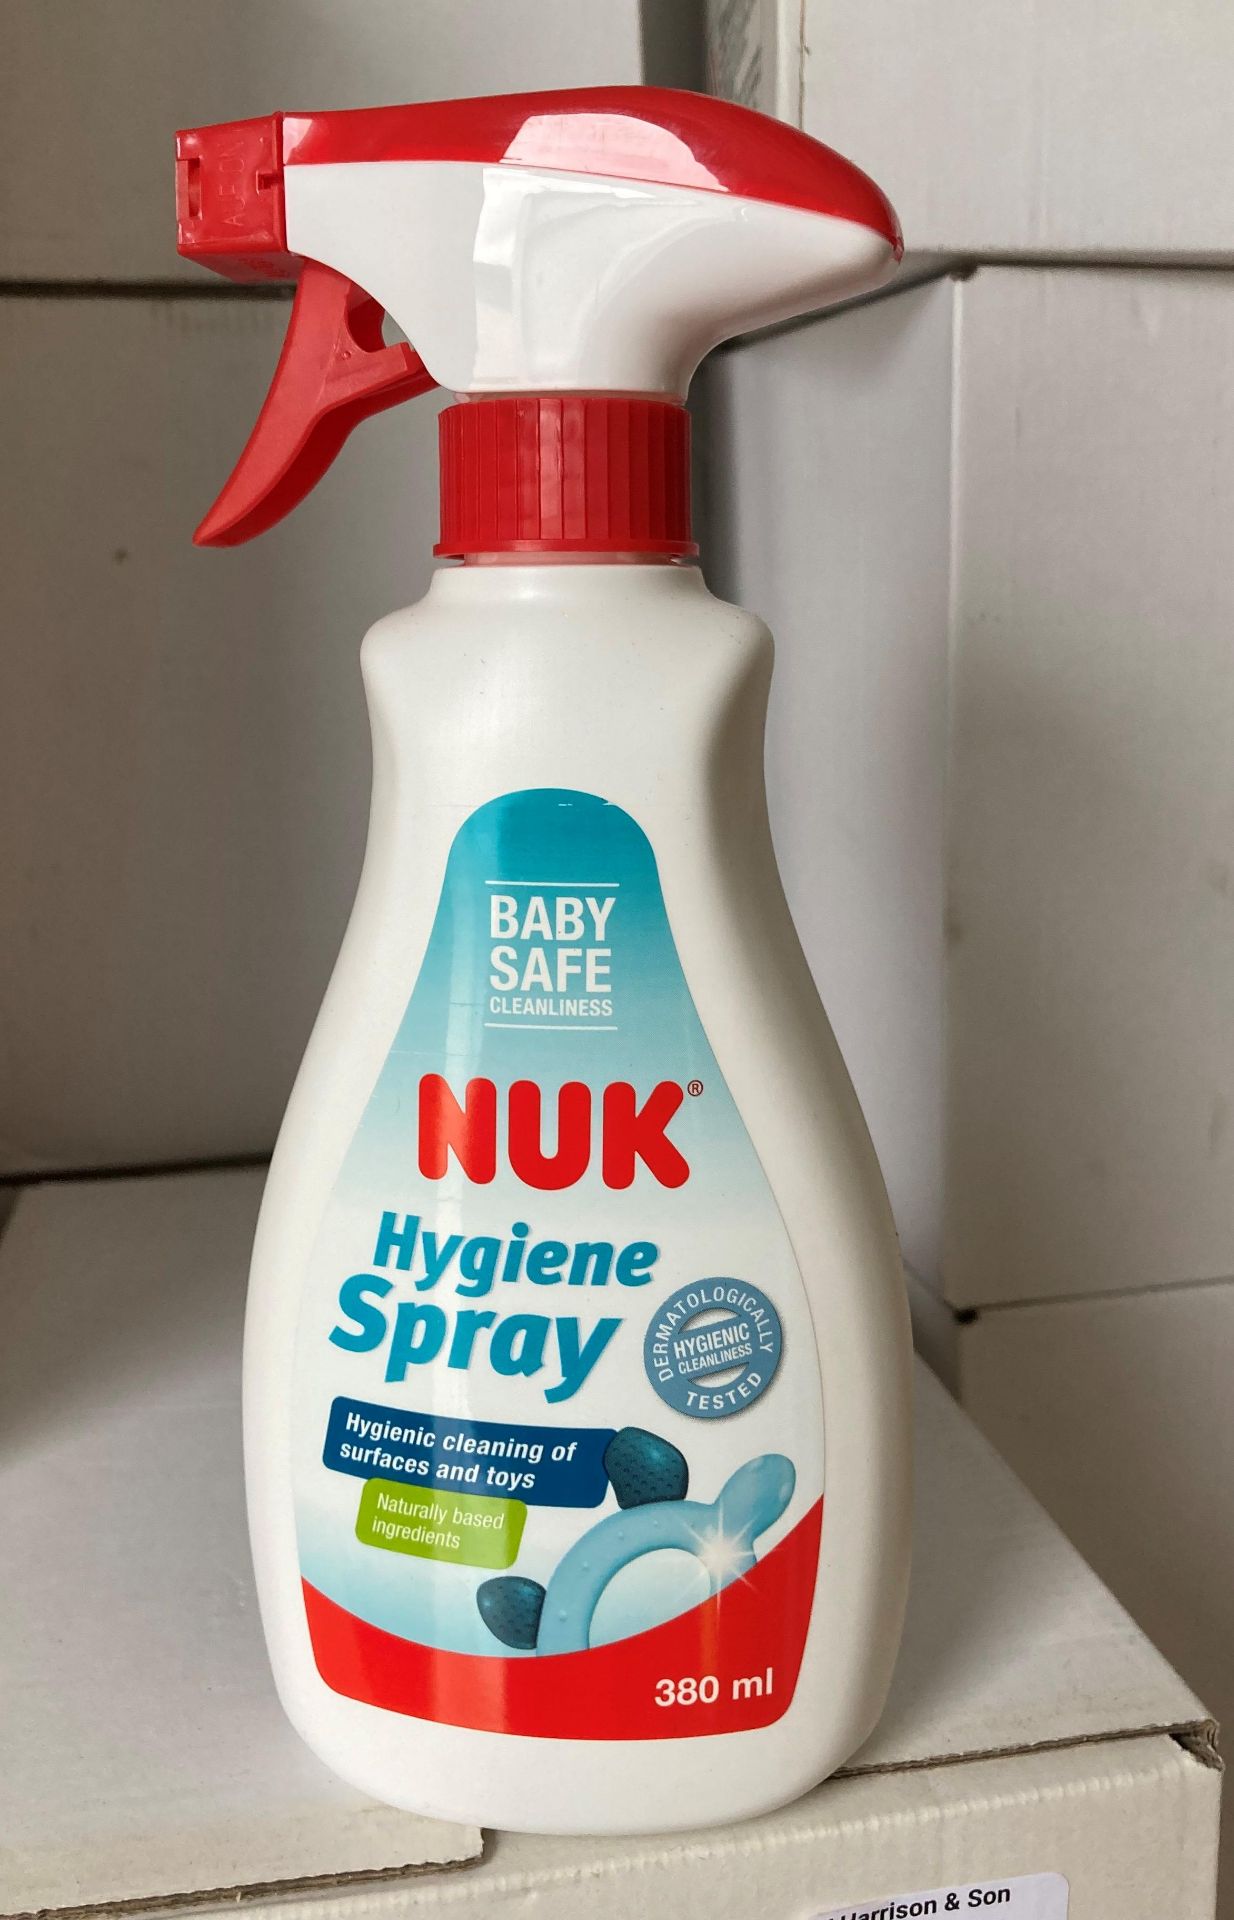 60 x 380ml NUK Hygiene baby-safe sprays (expired: 04/24) (6 x outer boxes) (saleroom location: